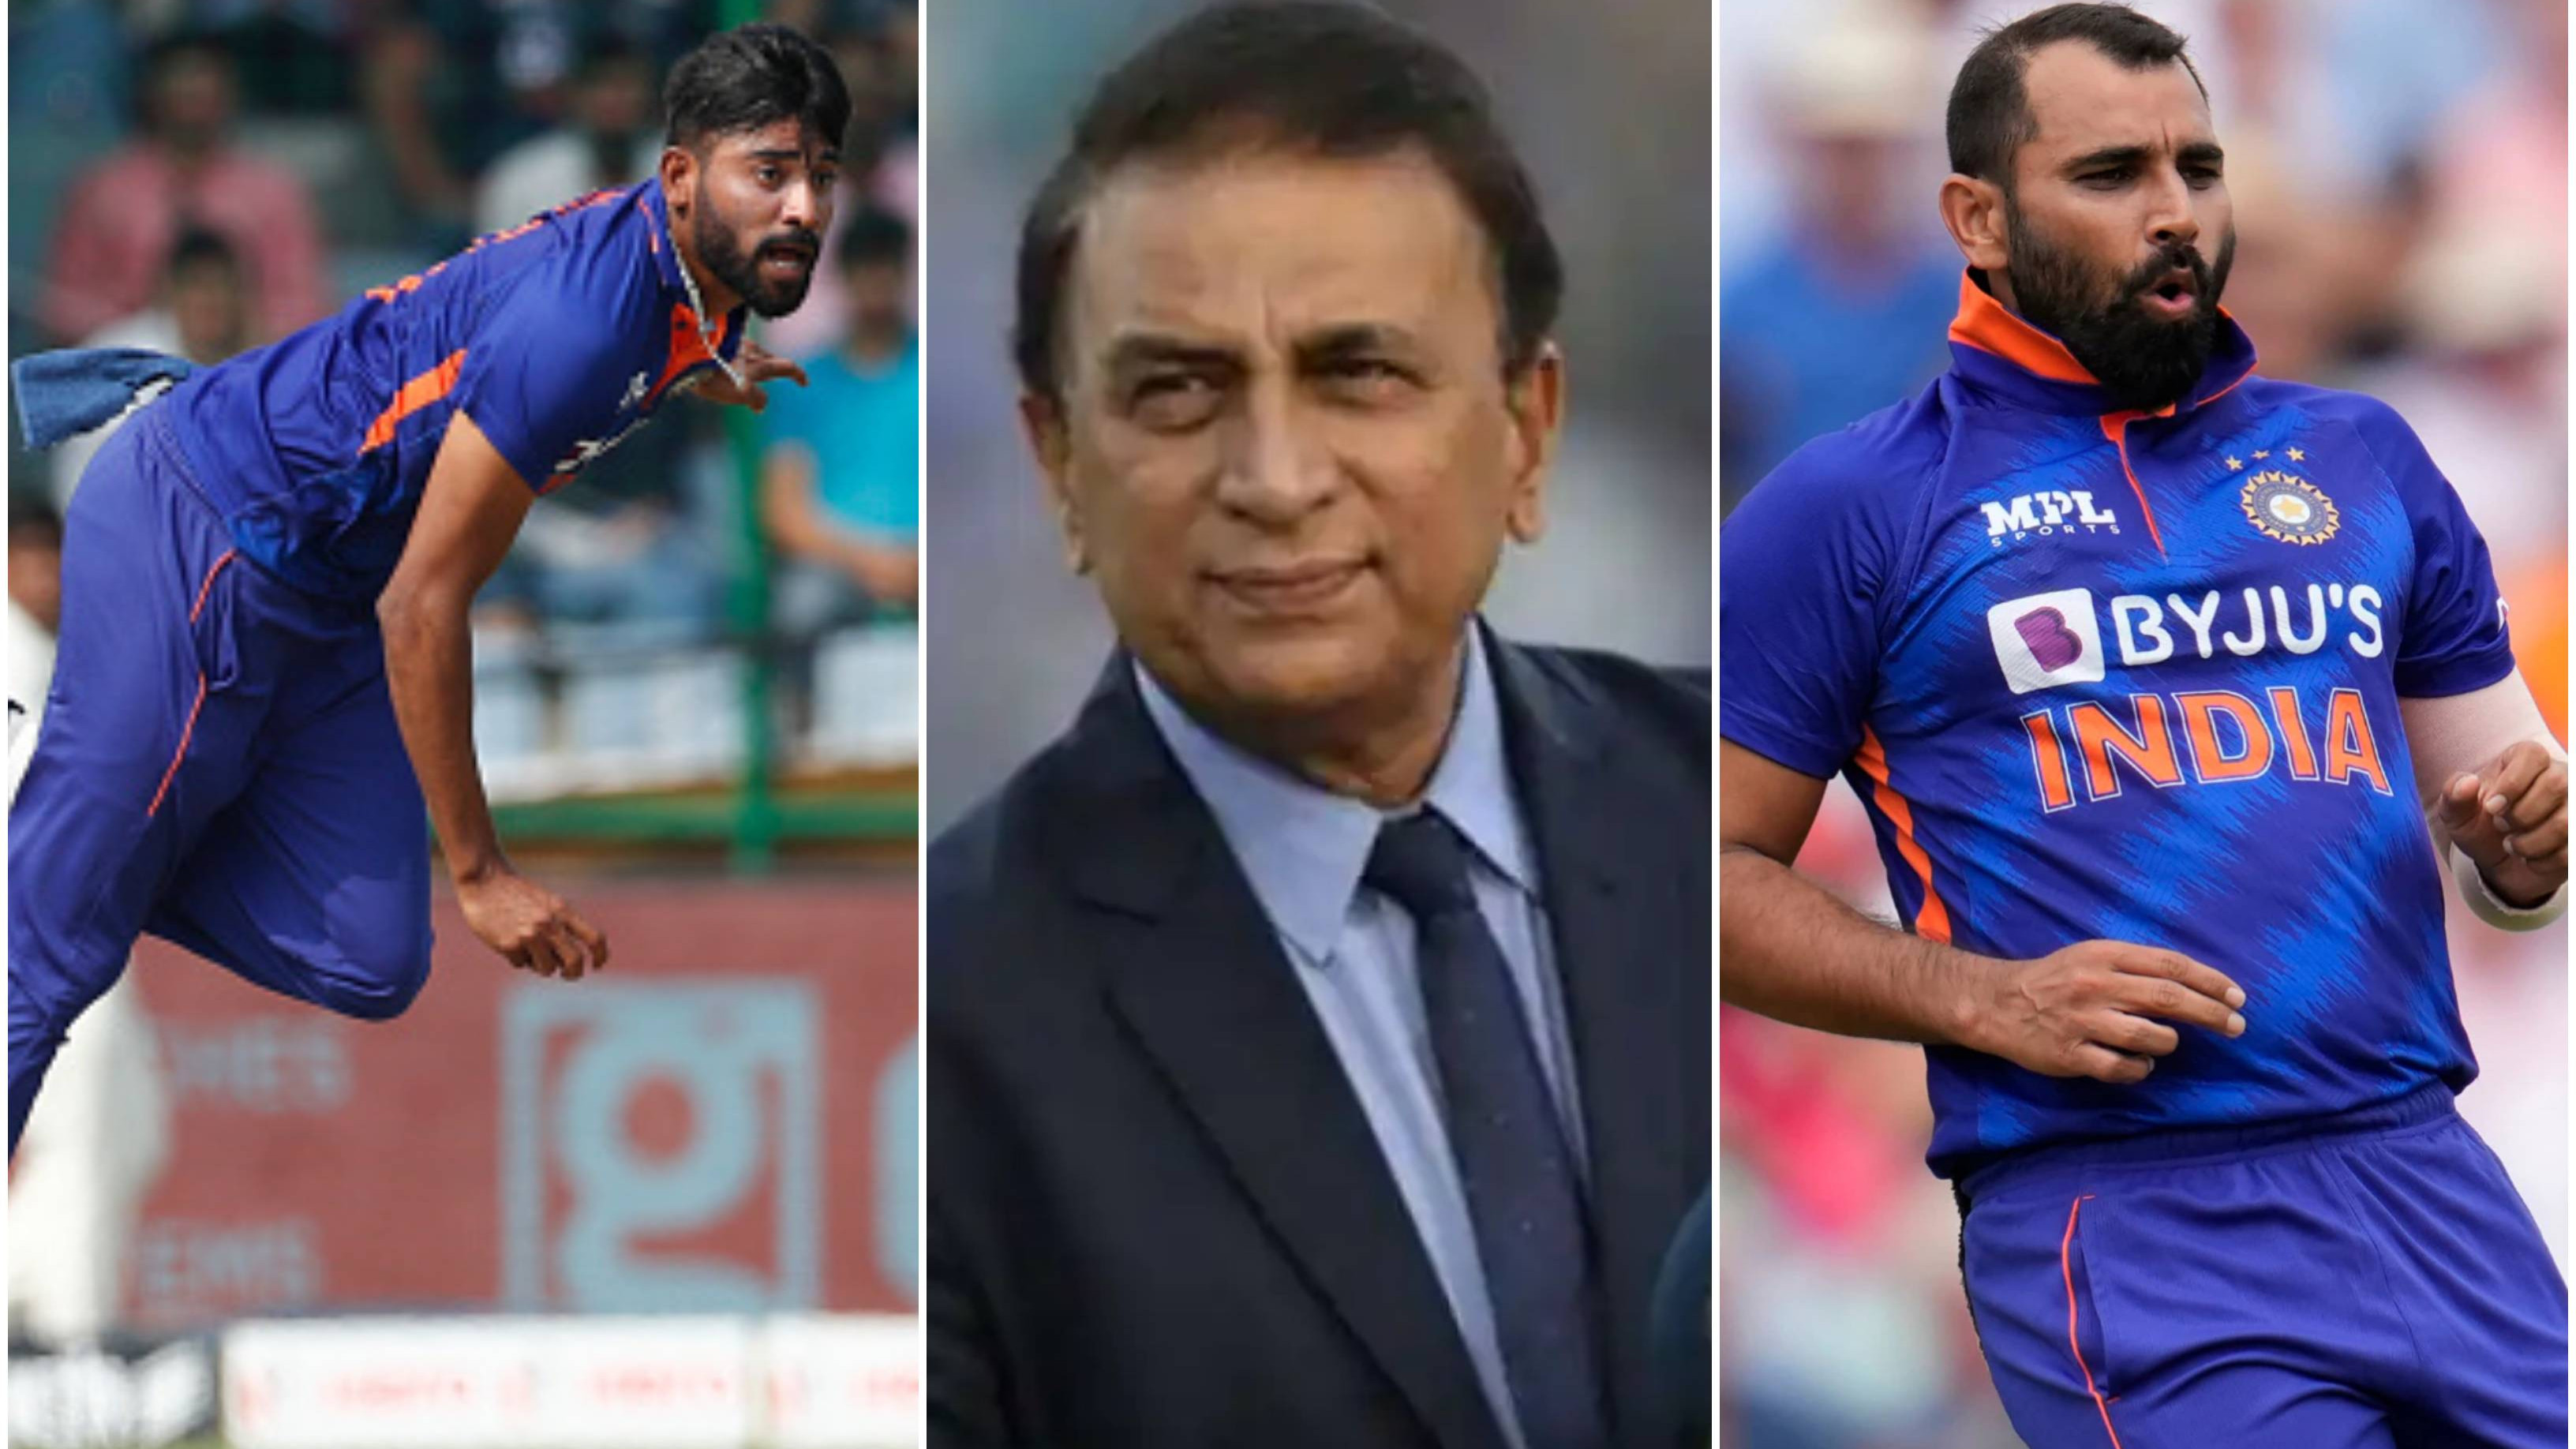 T20 World Cup 2022: Sunil Gavaskar reveals his choice between Siraj and Shami to replace Bumrah